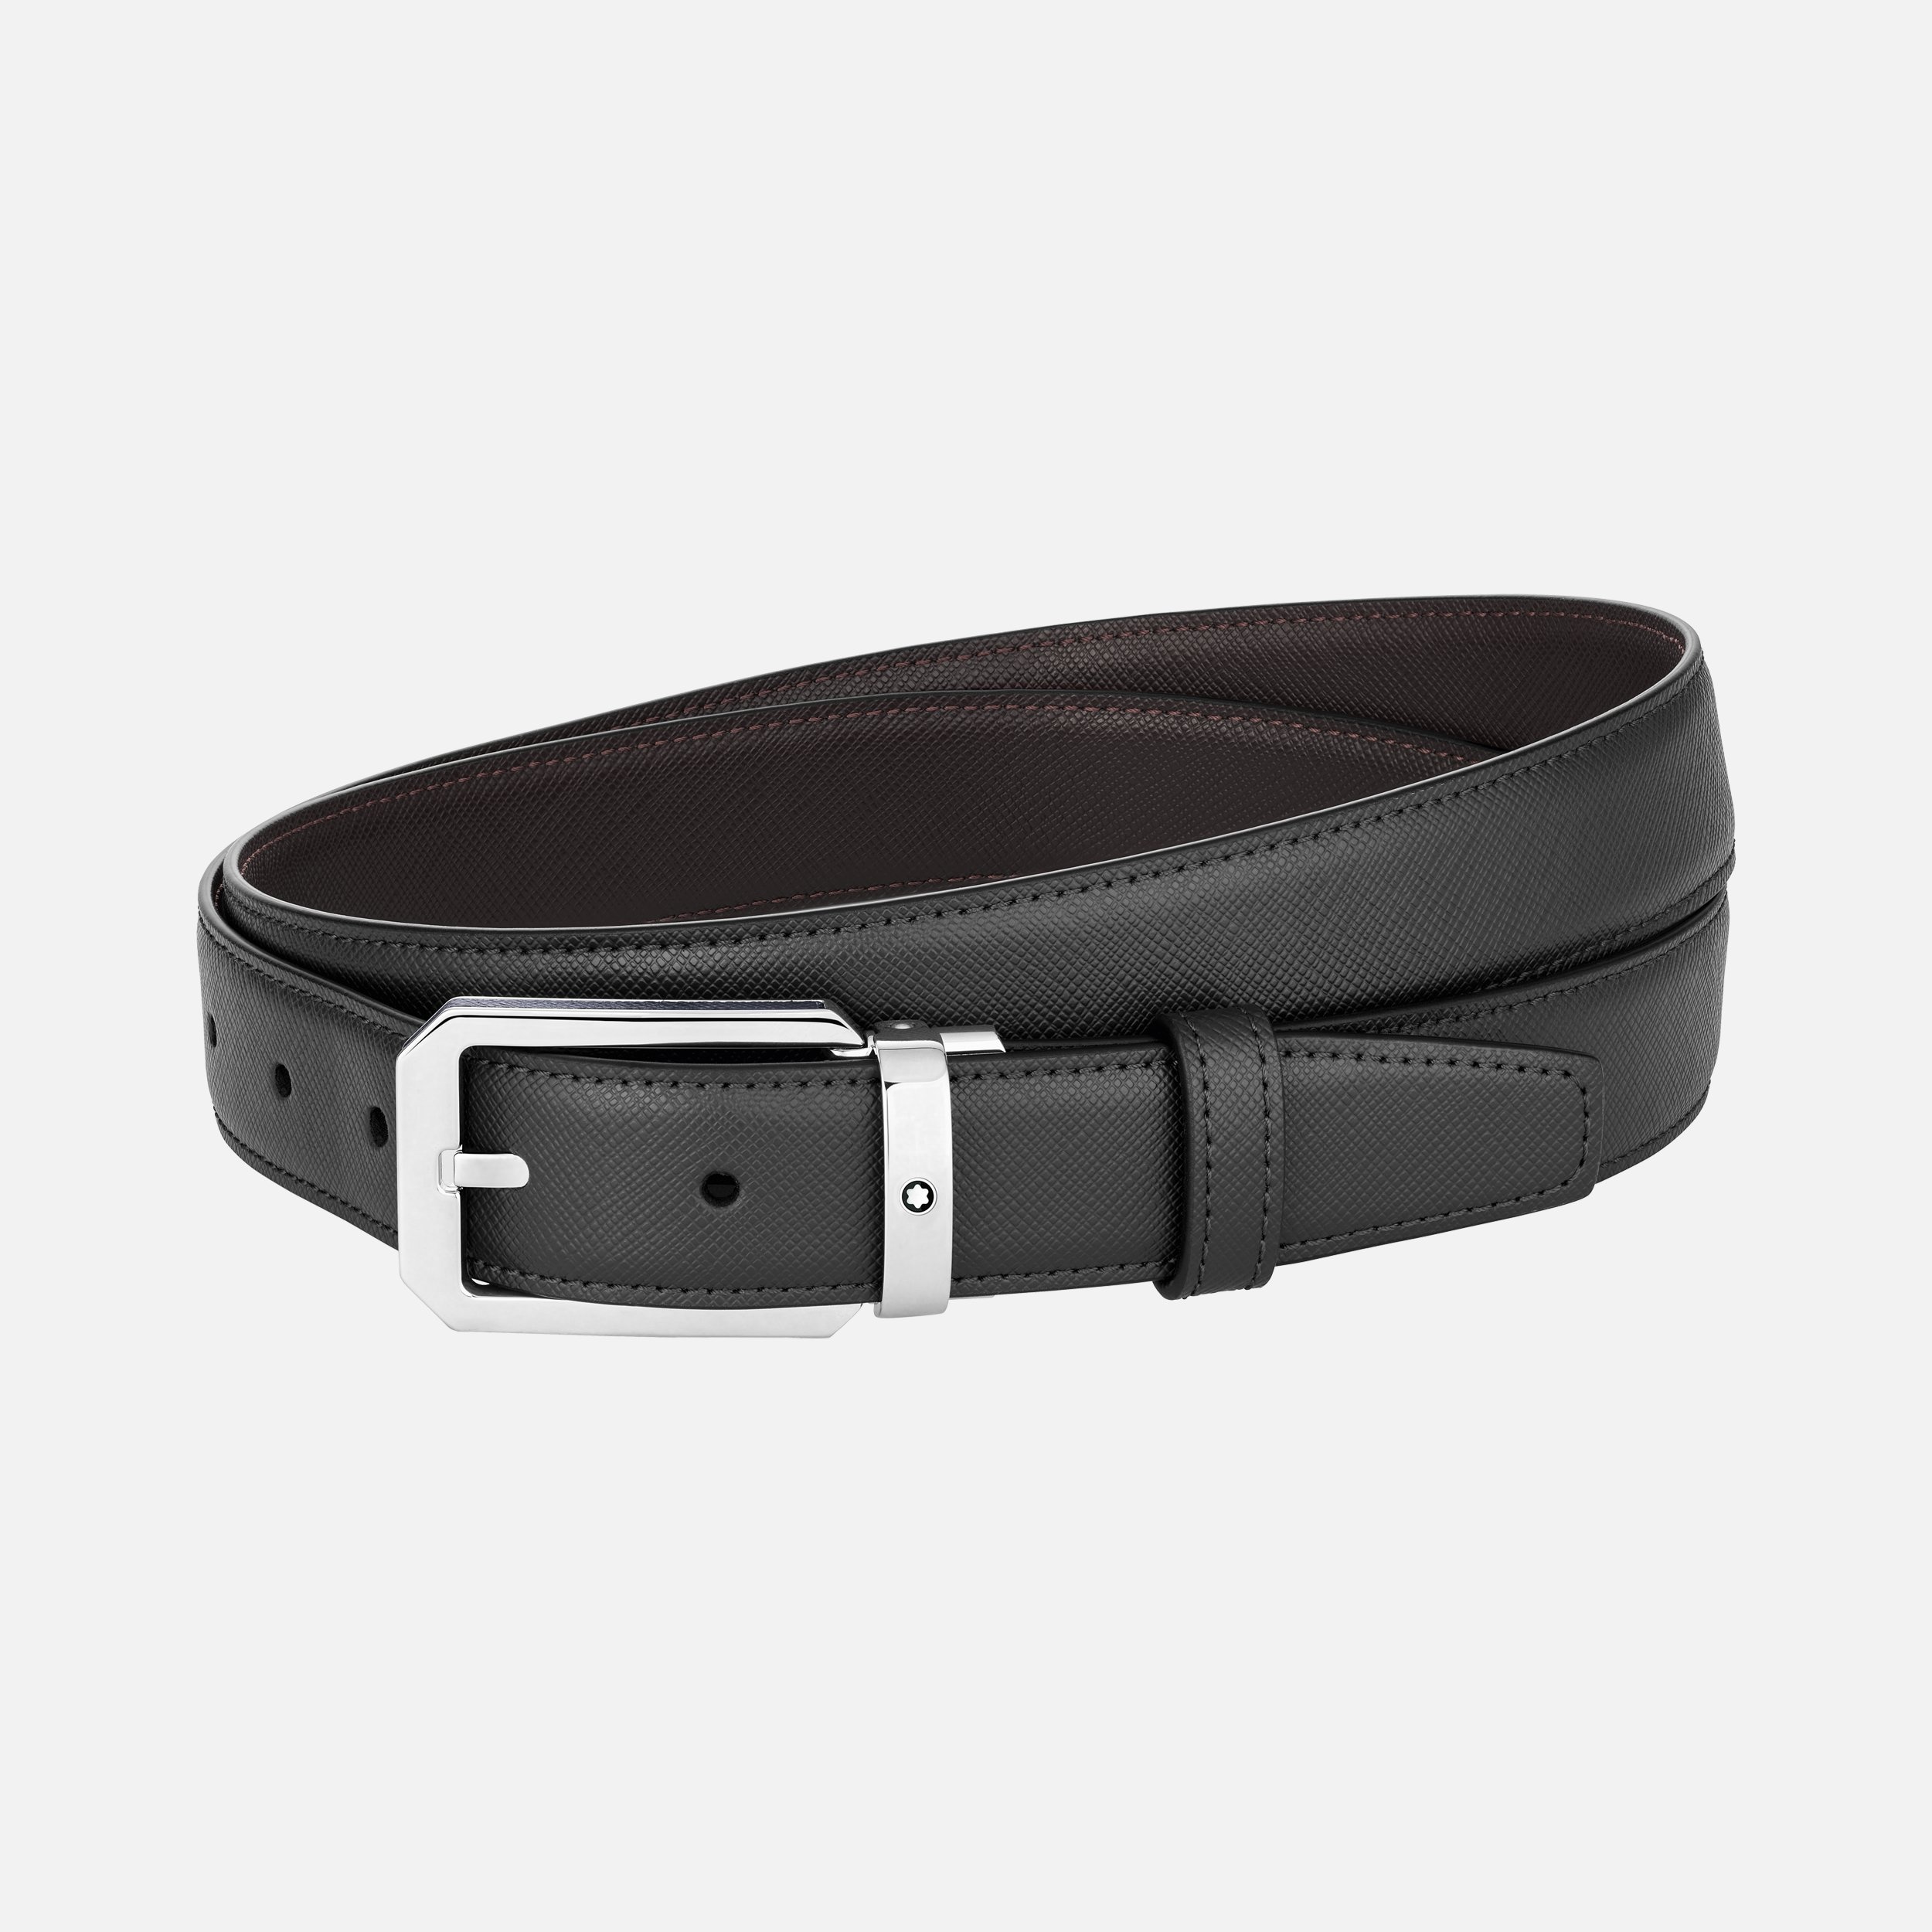 Black/brown 30 mm reversible leather belt - 1